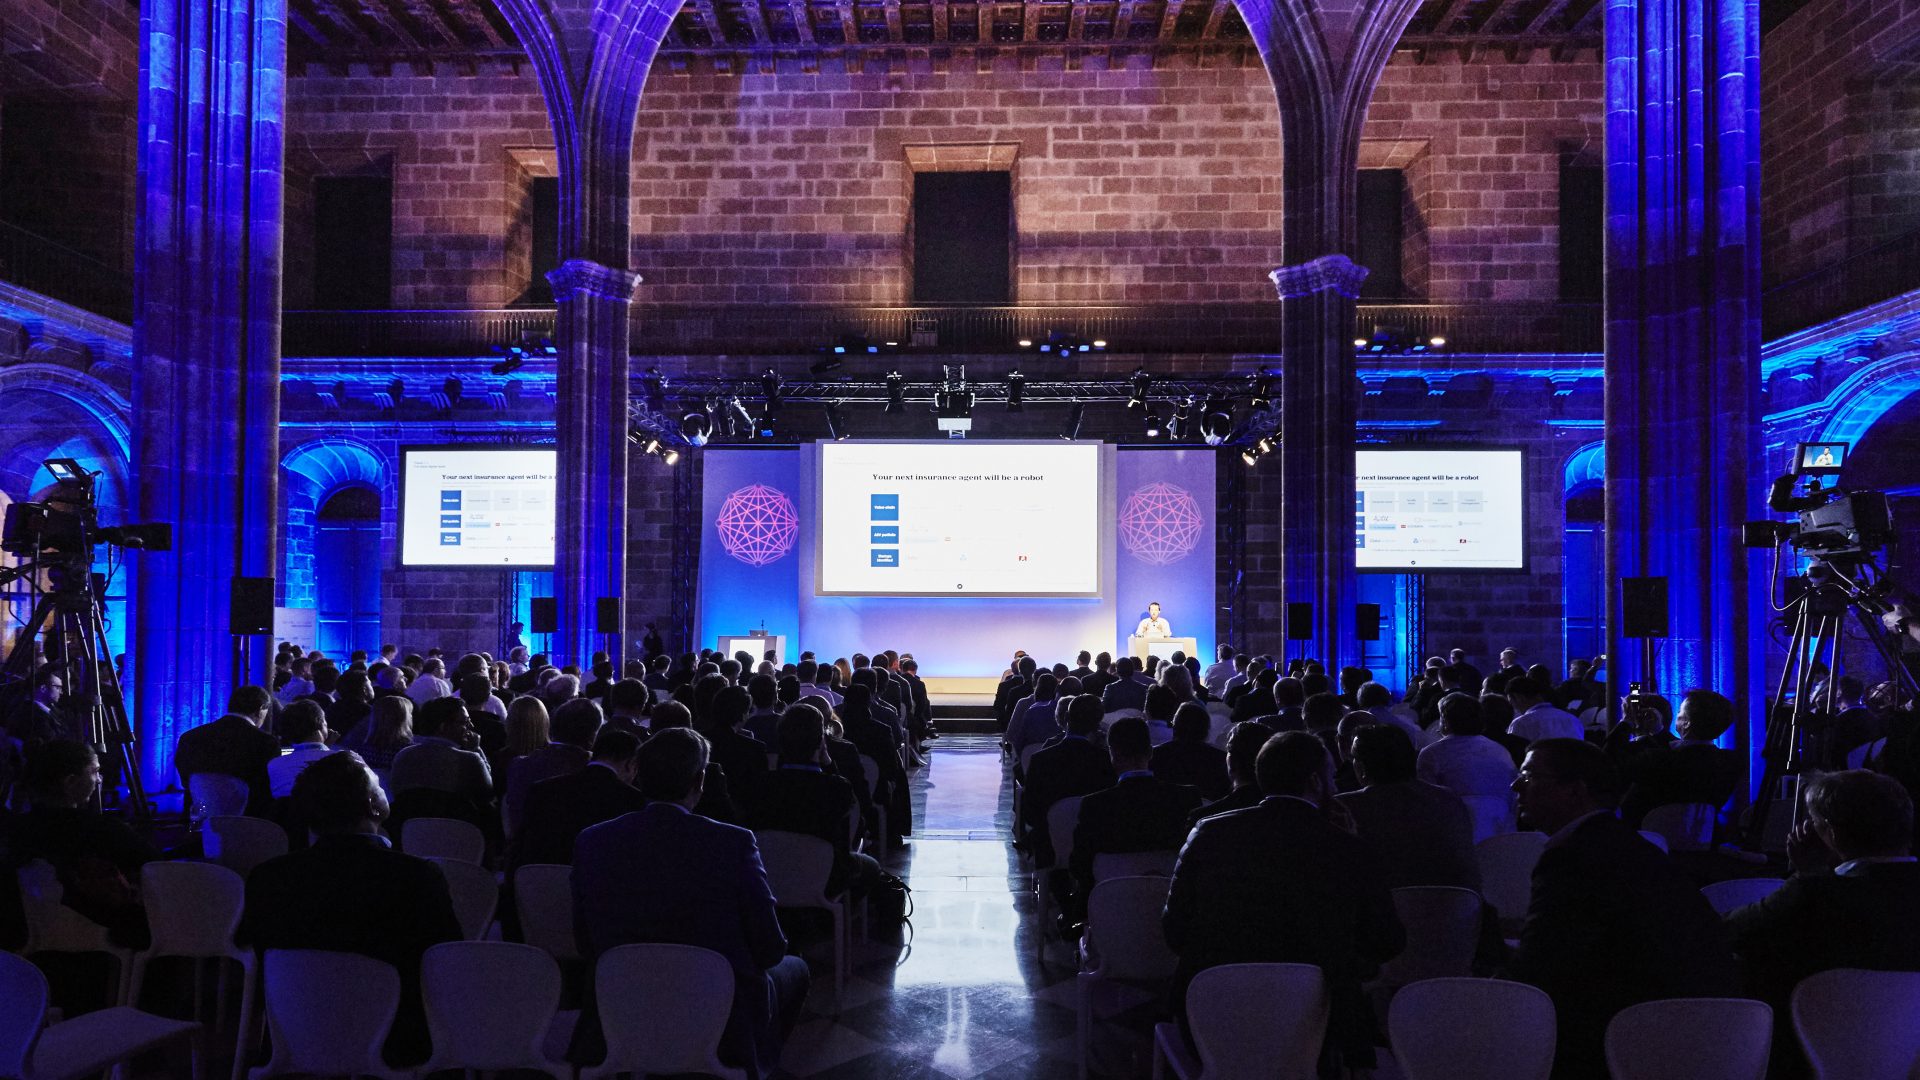 Corporate presentation in historical venue in Barcelona